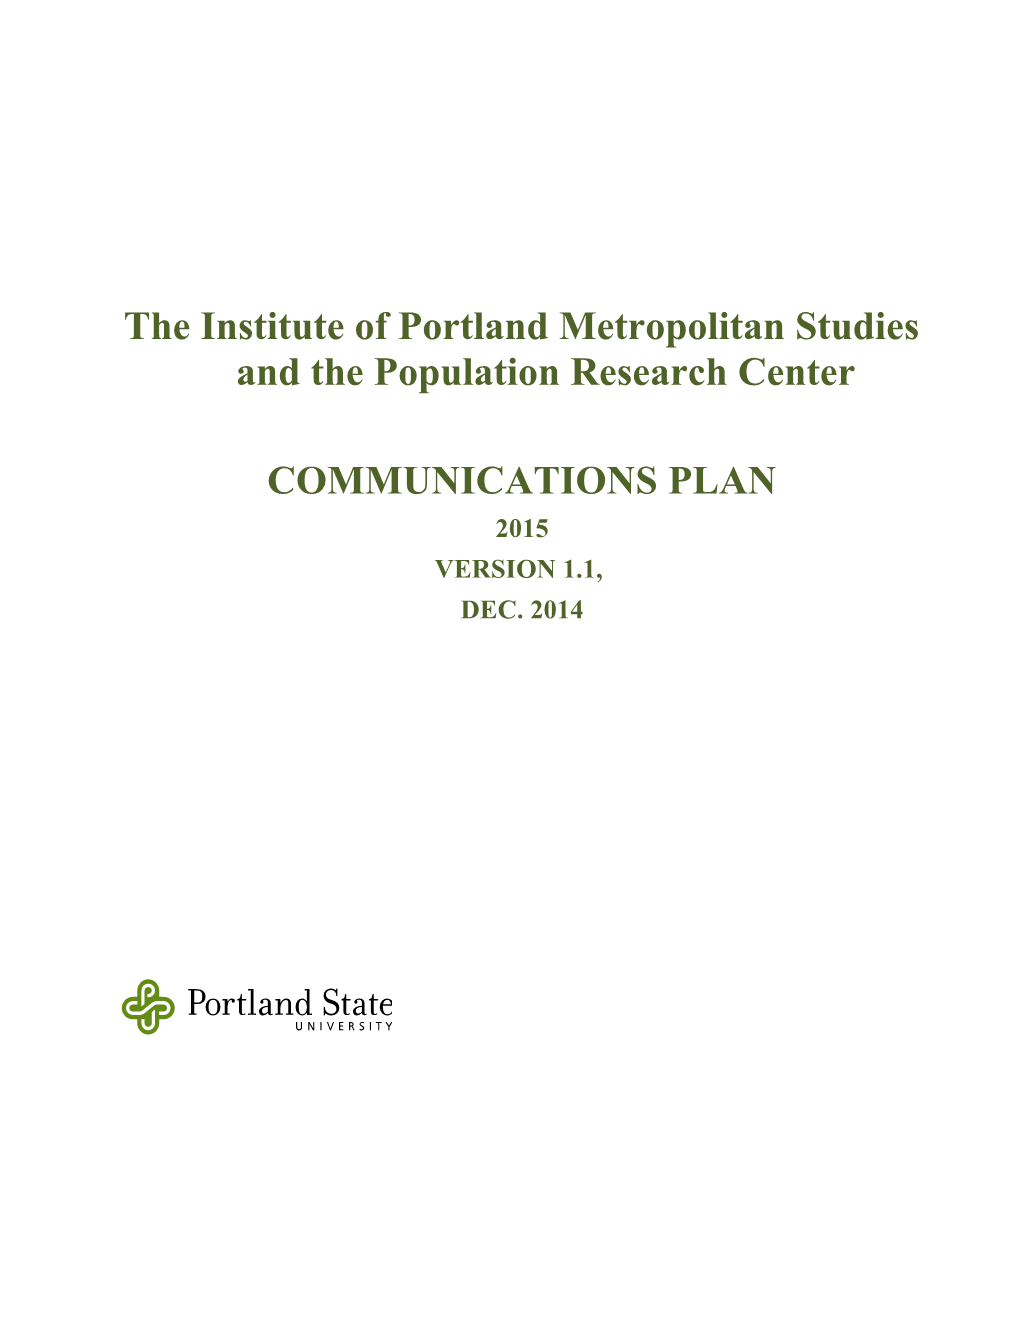 The Institute of Portland Metropolitan Studiesand the Population Research Center